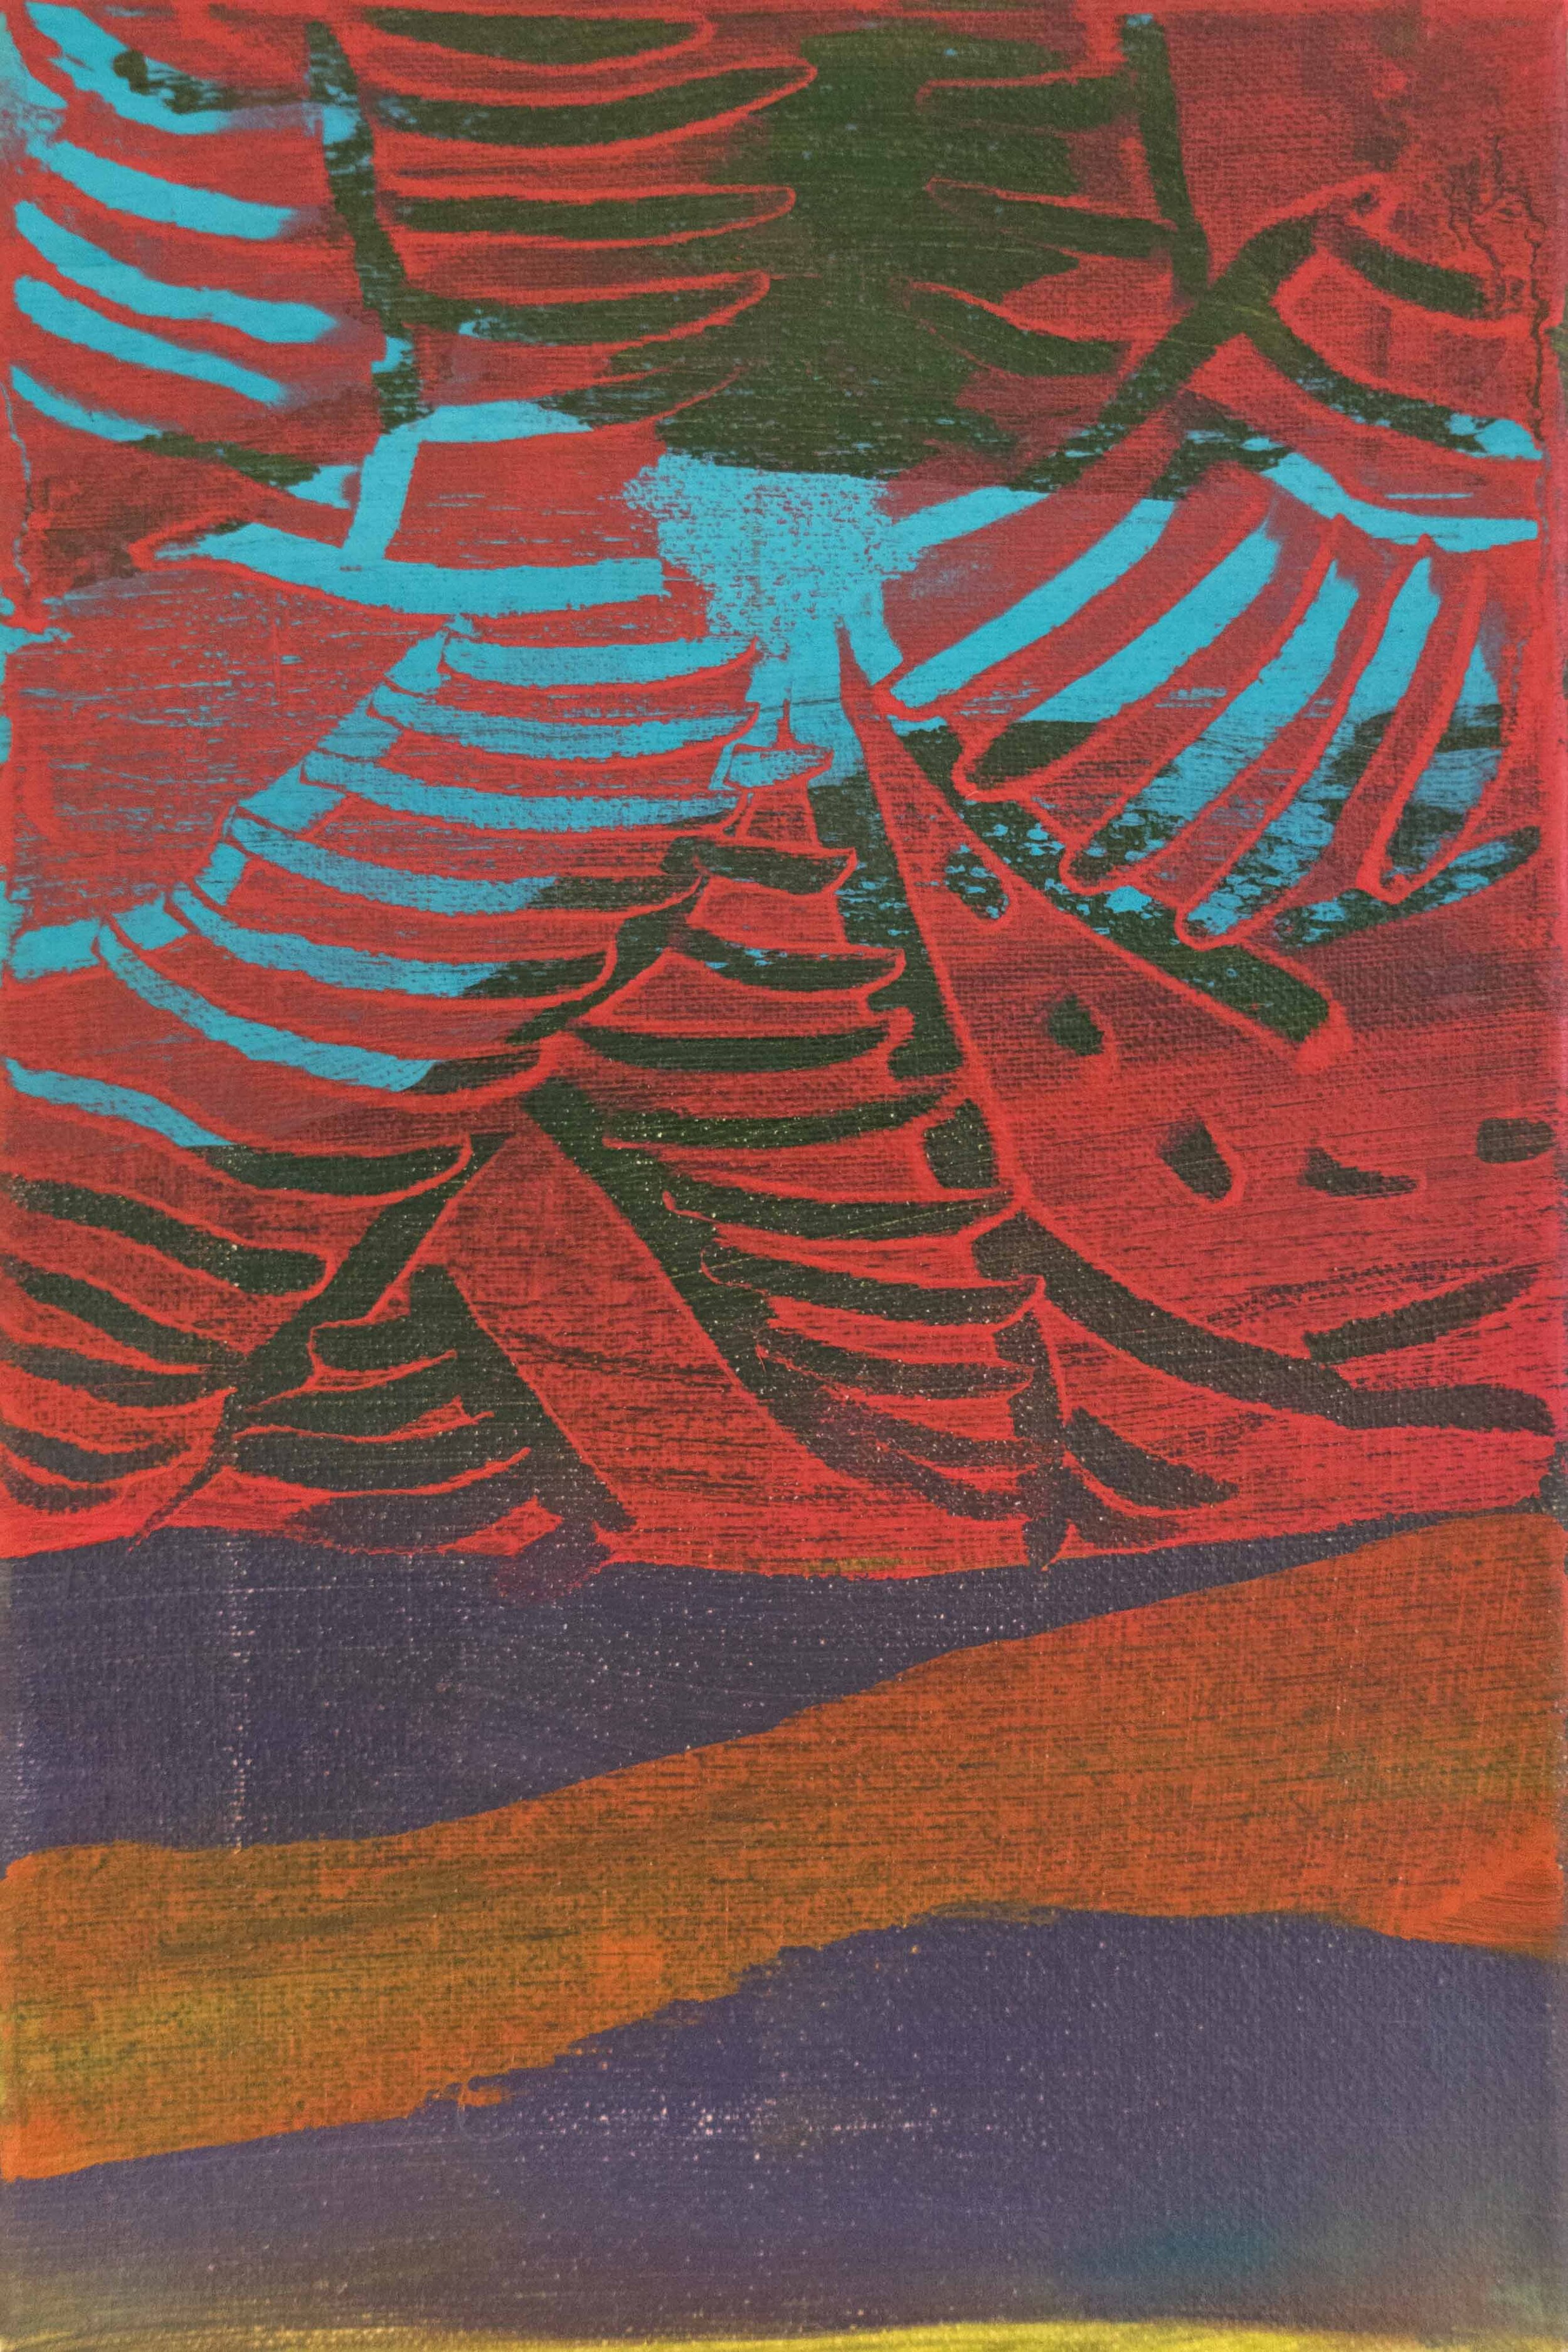  30 × 20 cm, Oil on Canvas, 2017 